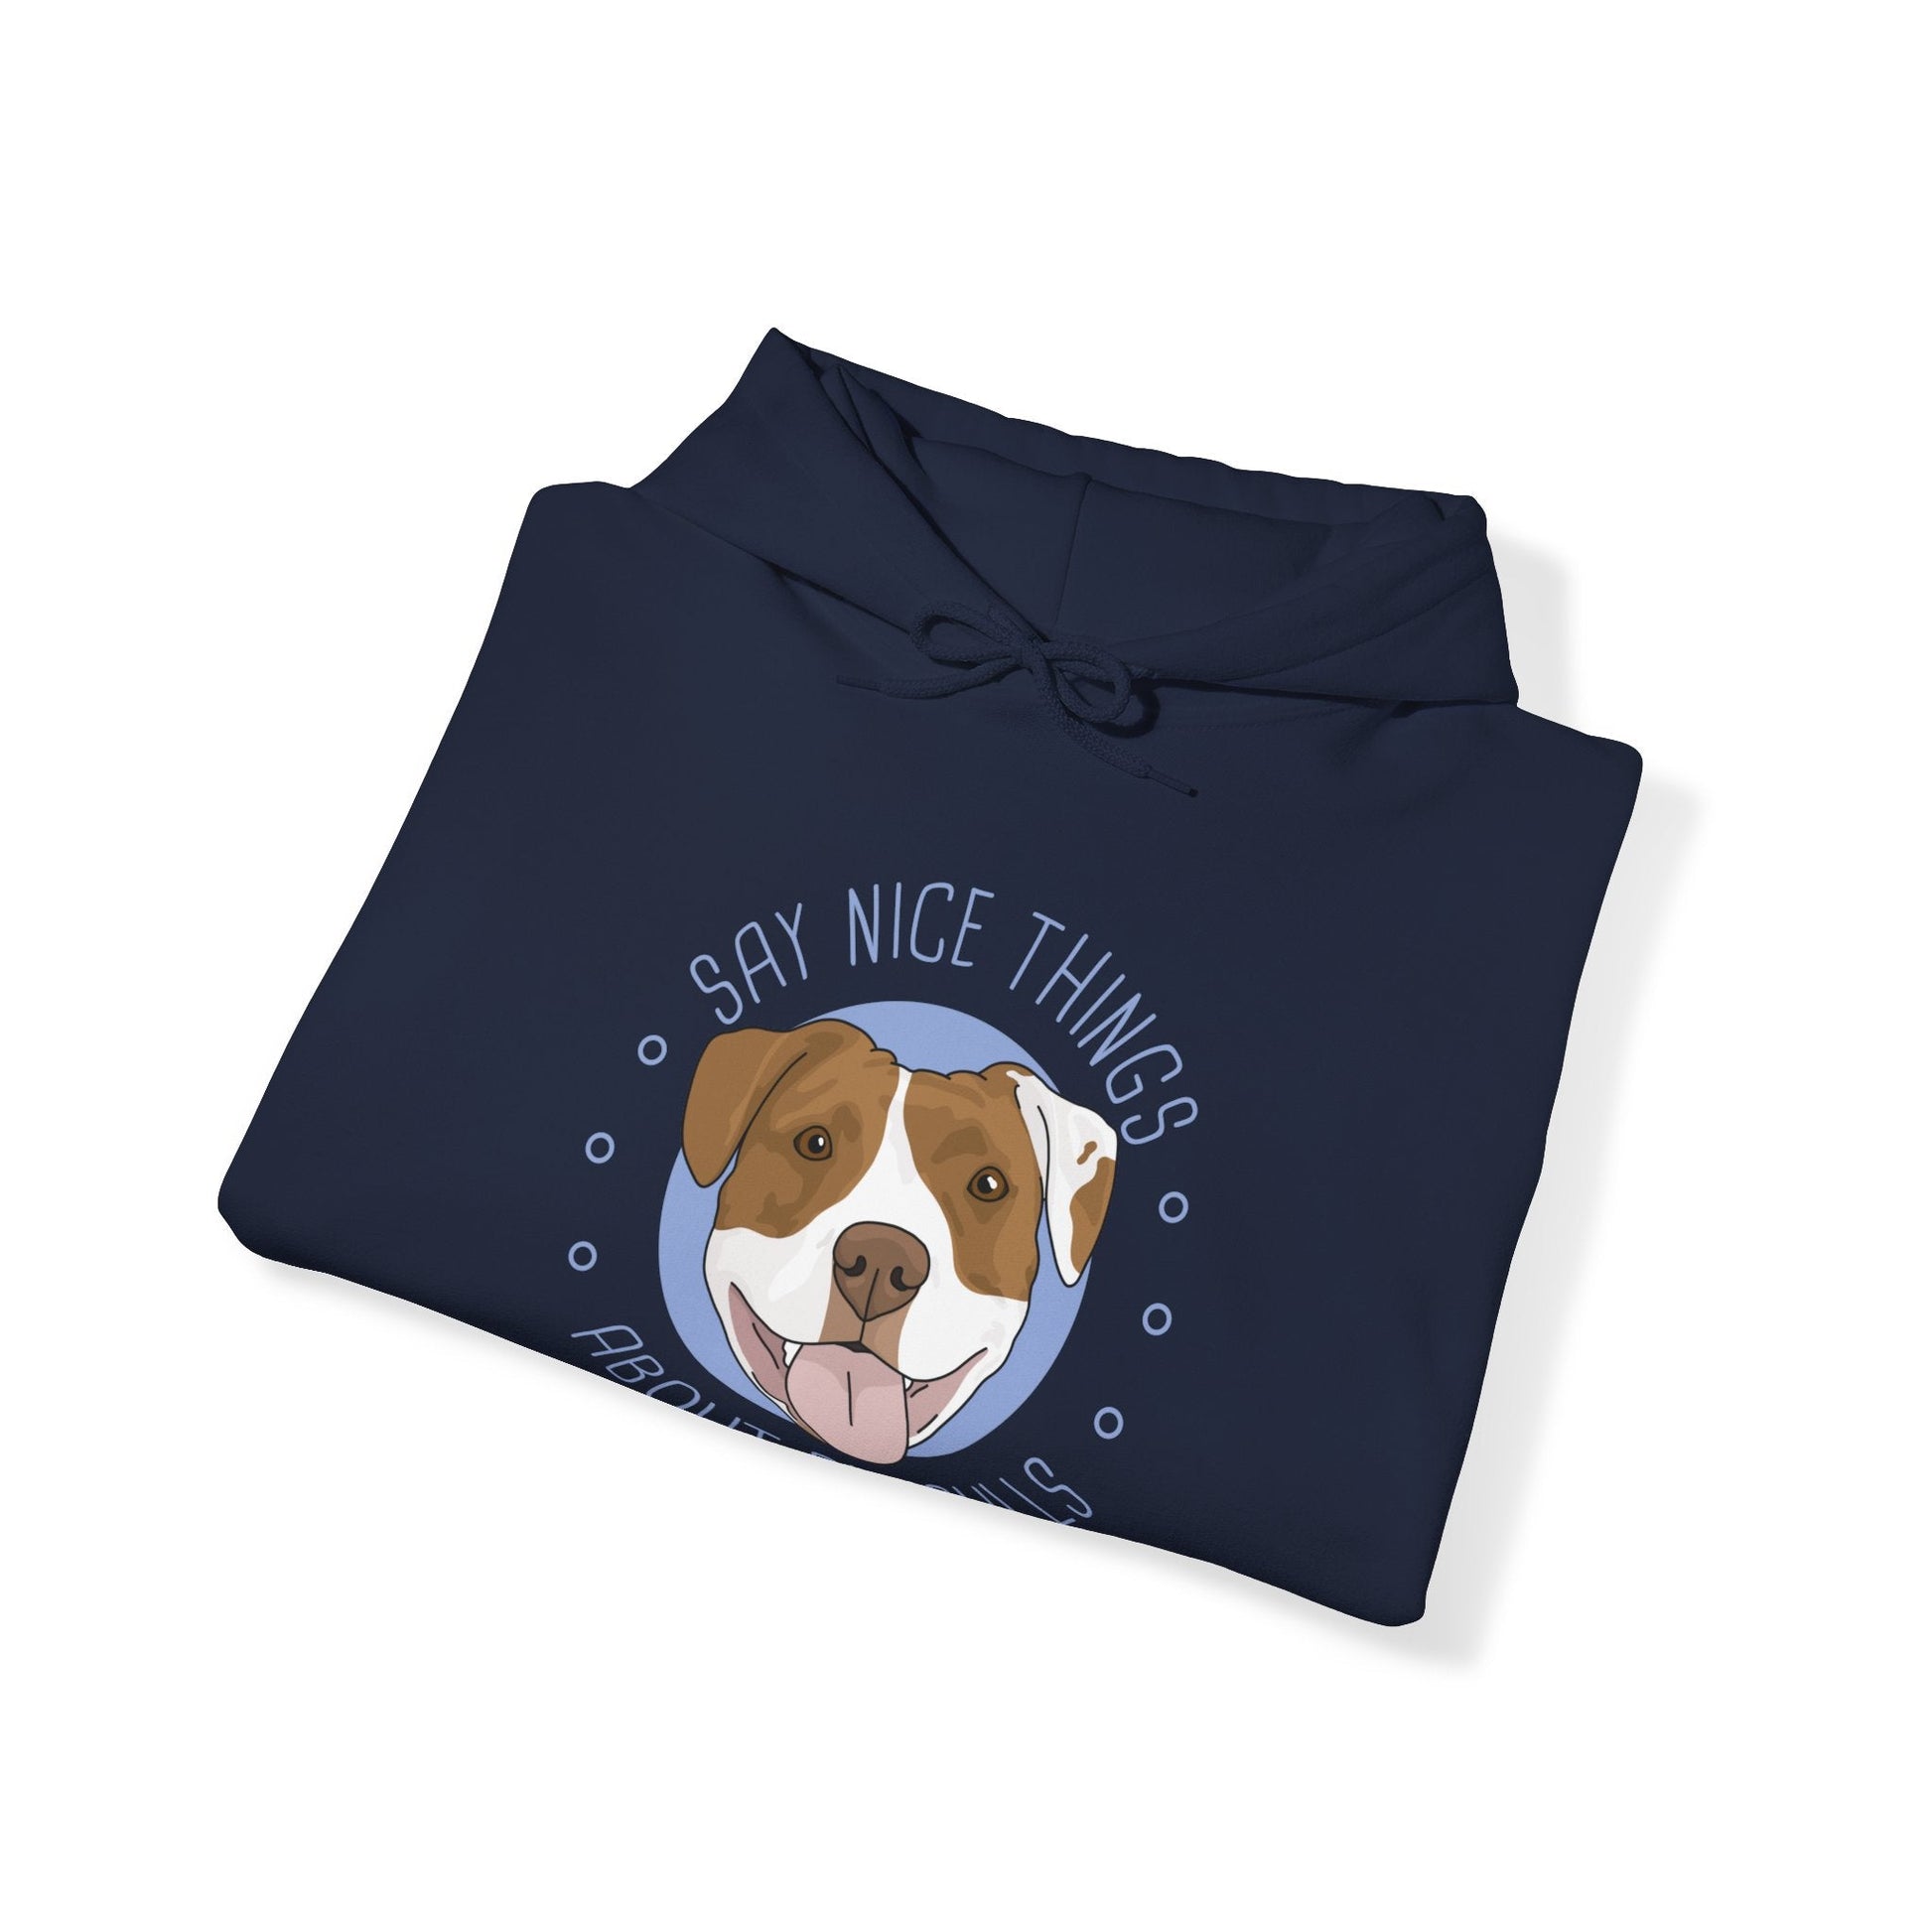 Say Nice Things About Pit Bulls | Hooded Sweatshirt - Detezi Designs-32709539965864487865